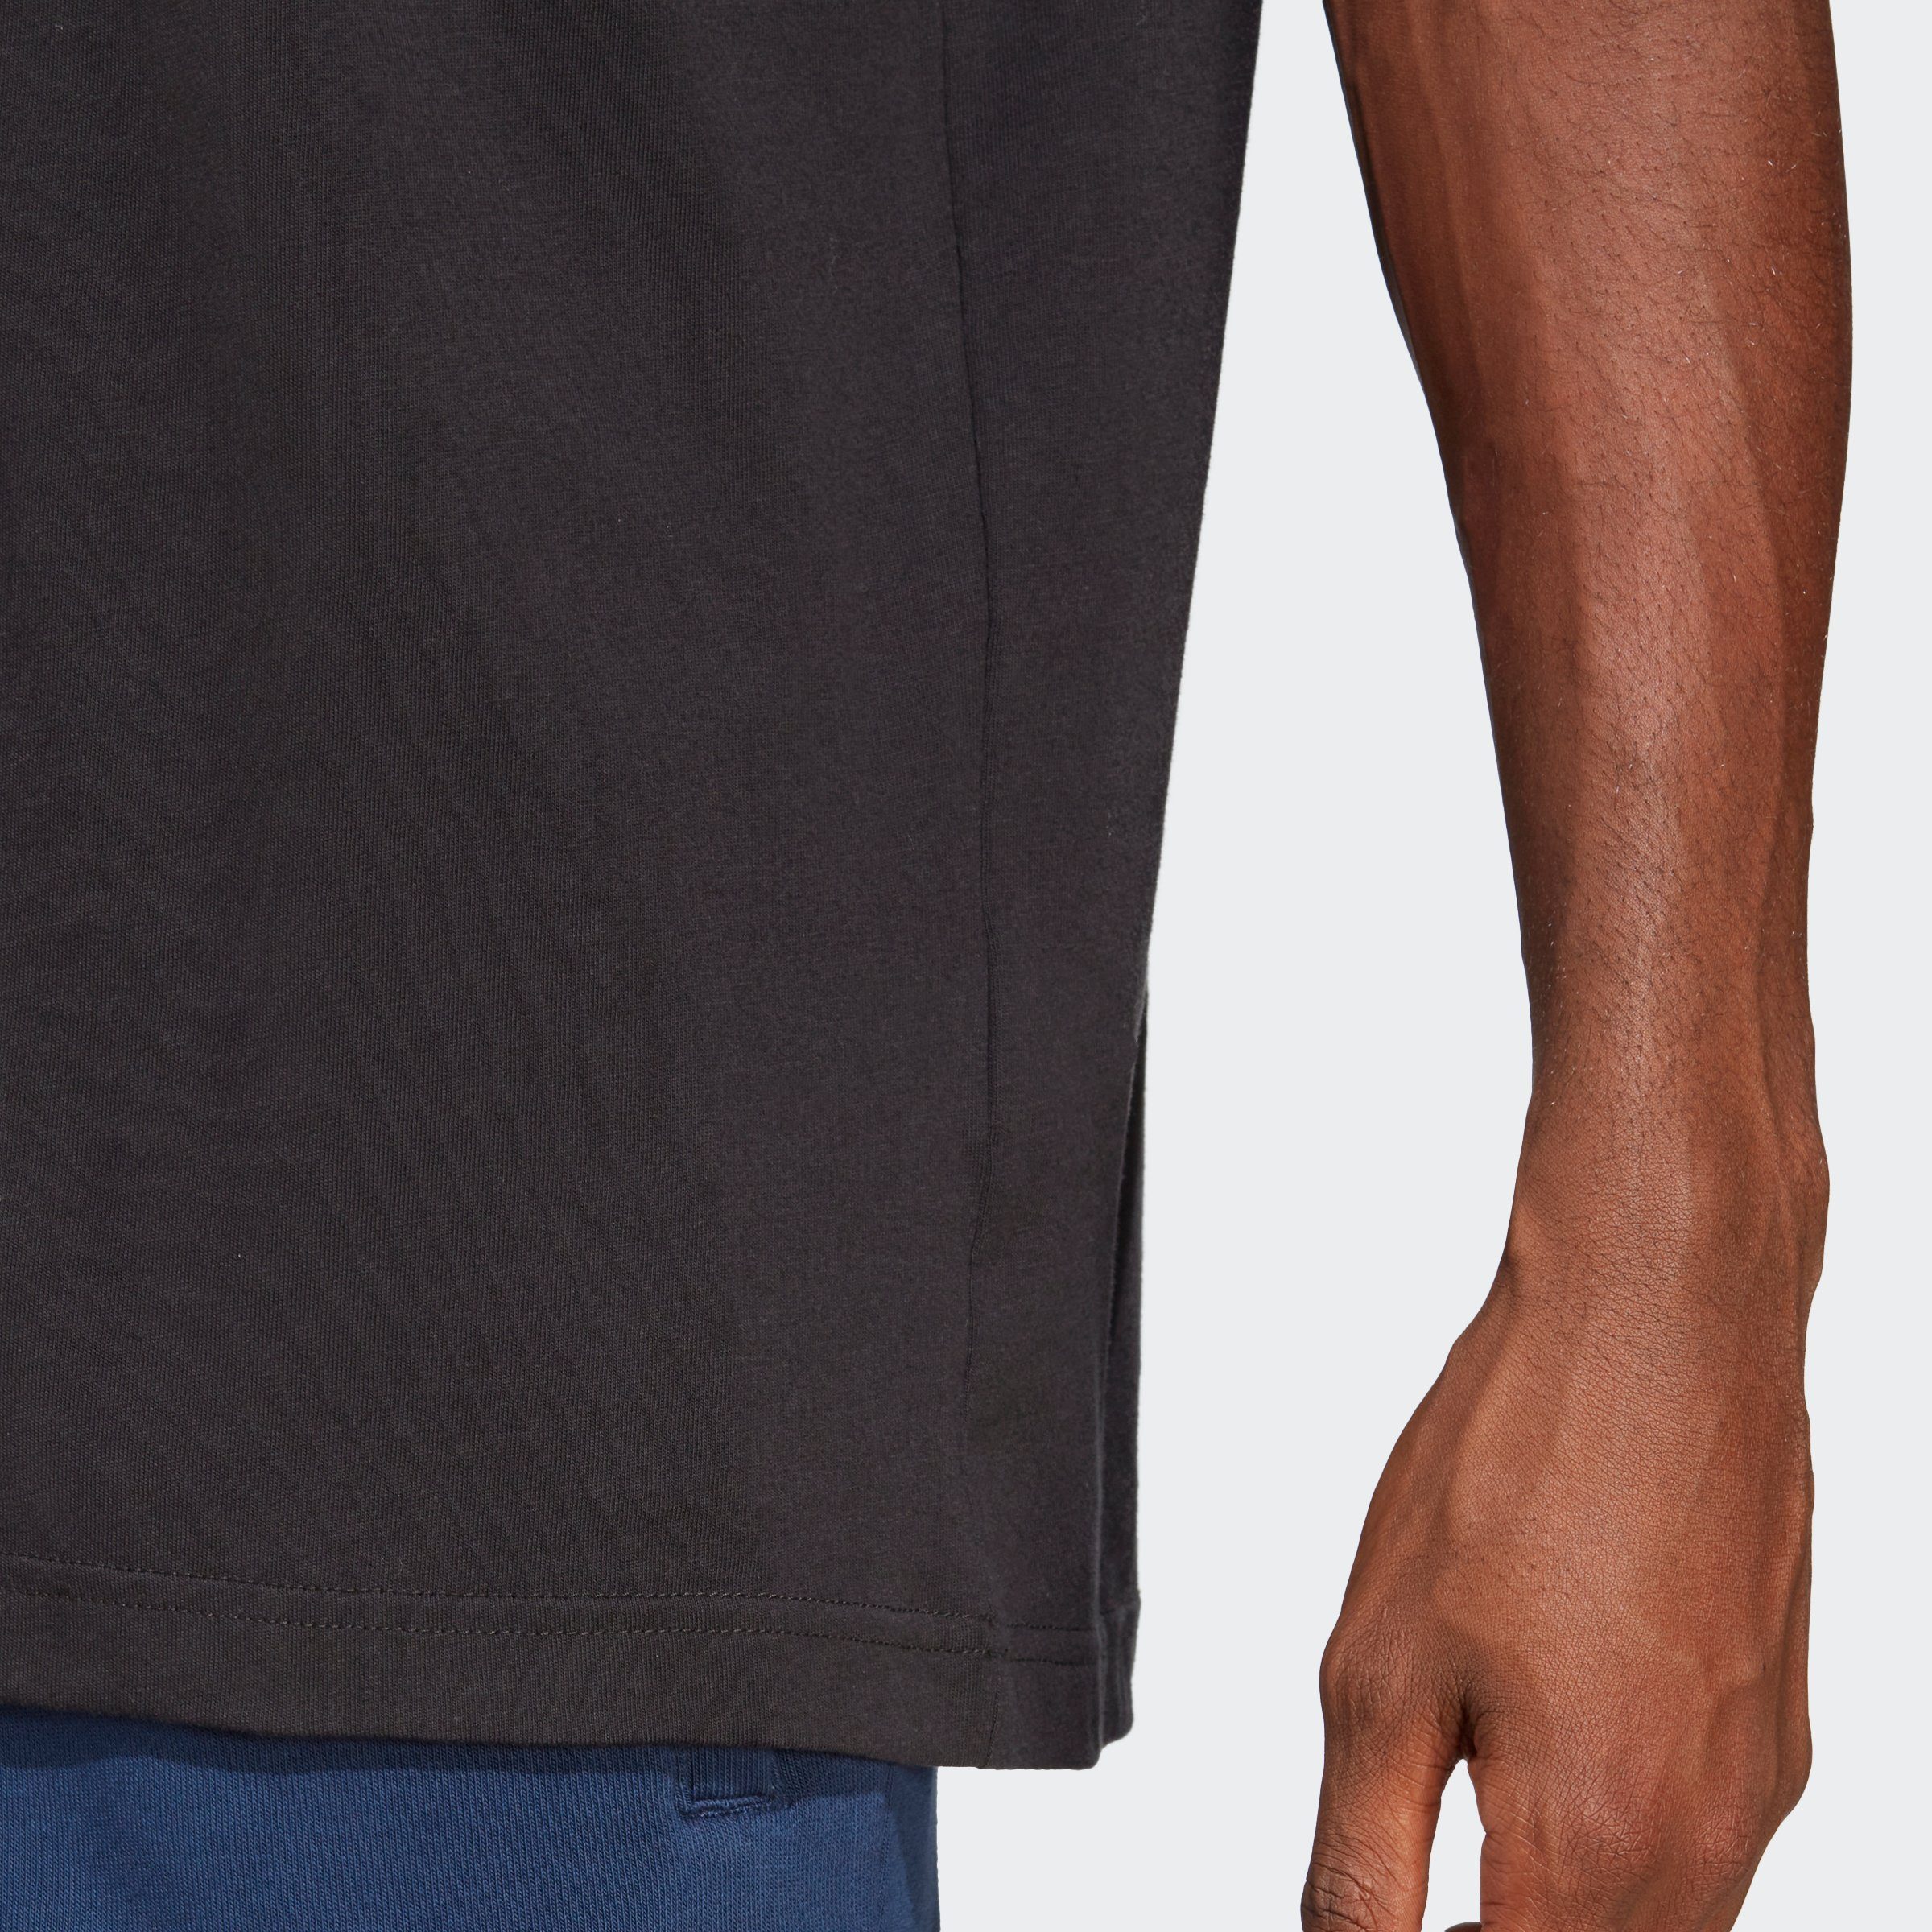 adidas Originals T-Shirt TREFOIL Black ESSENTIALS